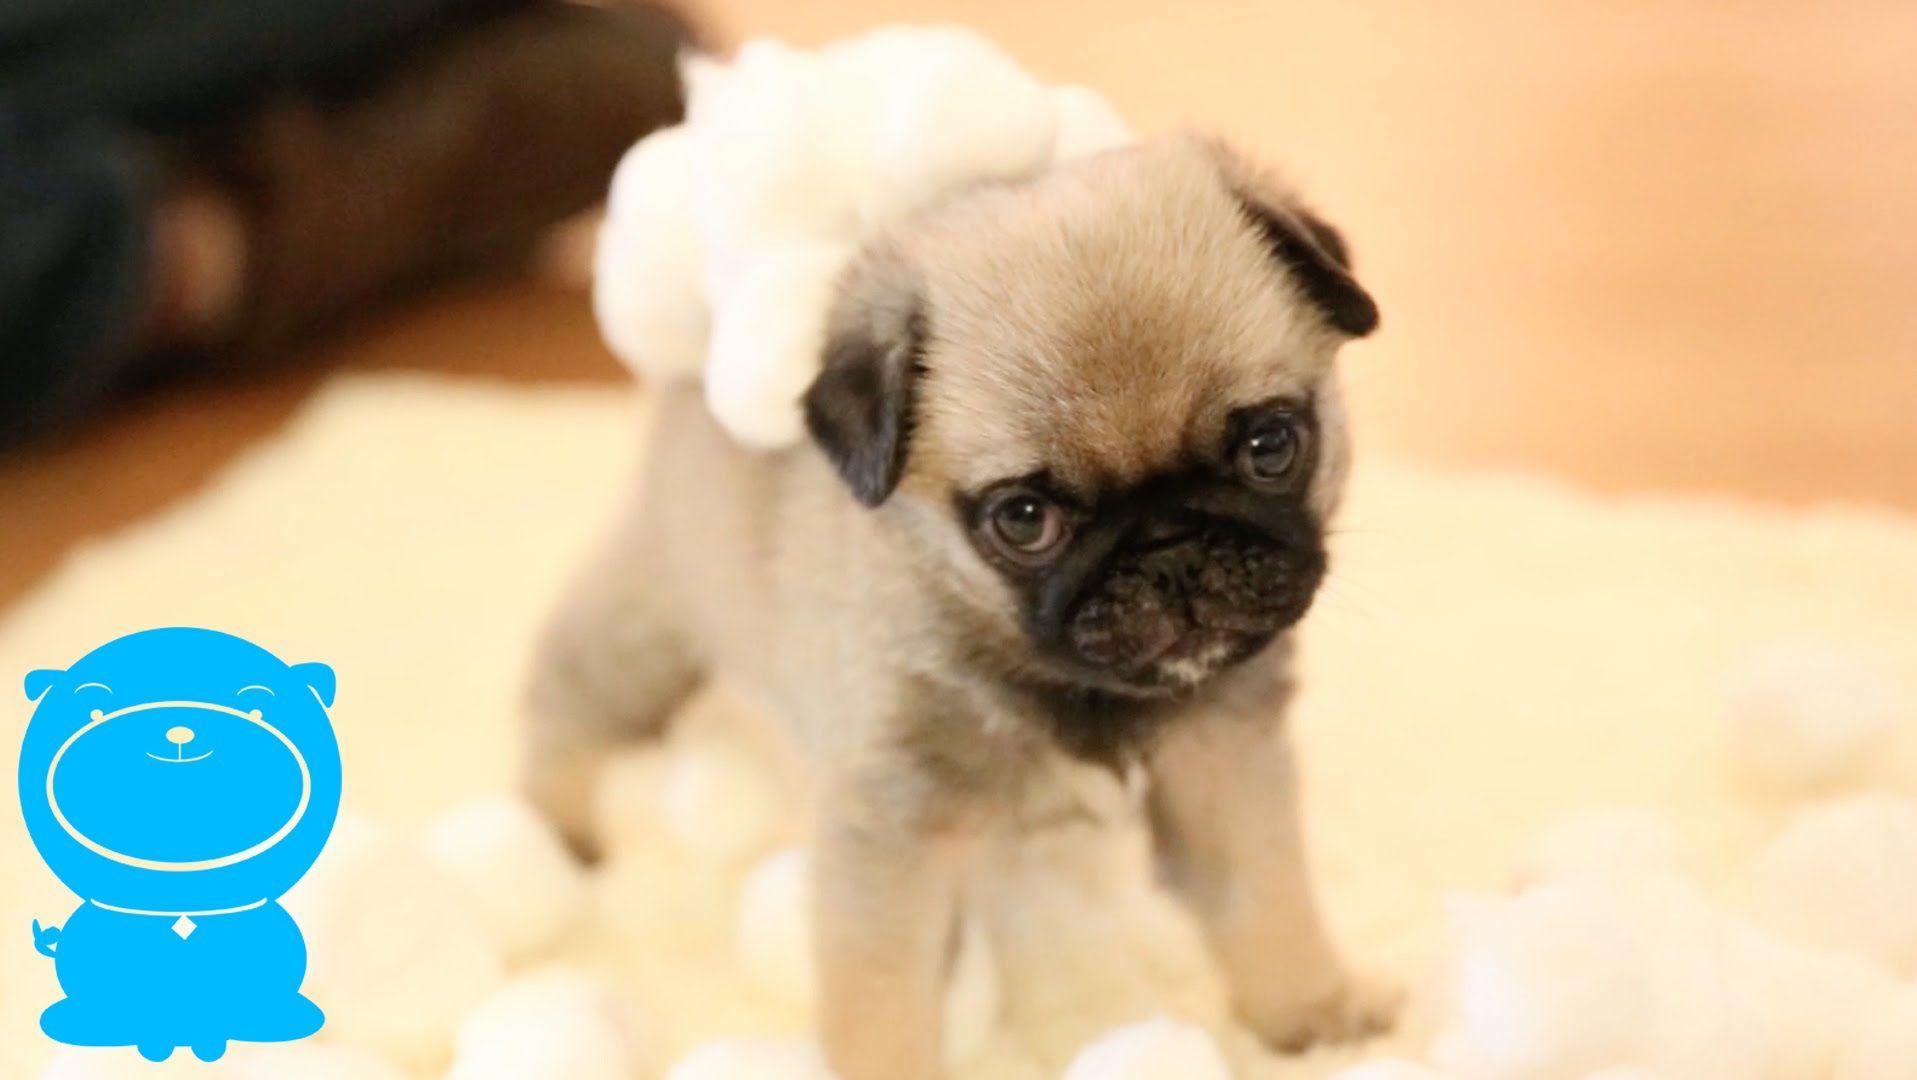 Precious Pug Puppy In Fluffy Cotton Ball Snow Land!